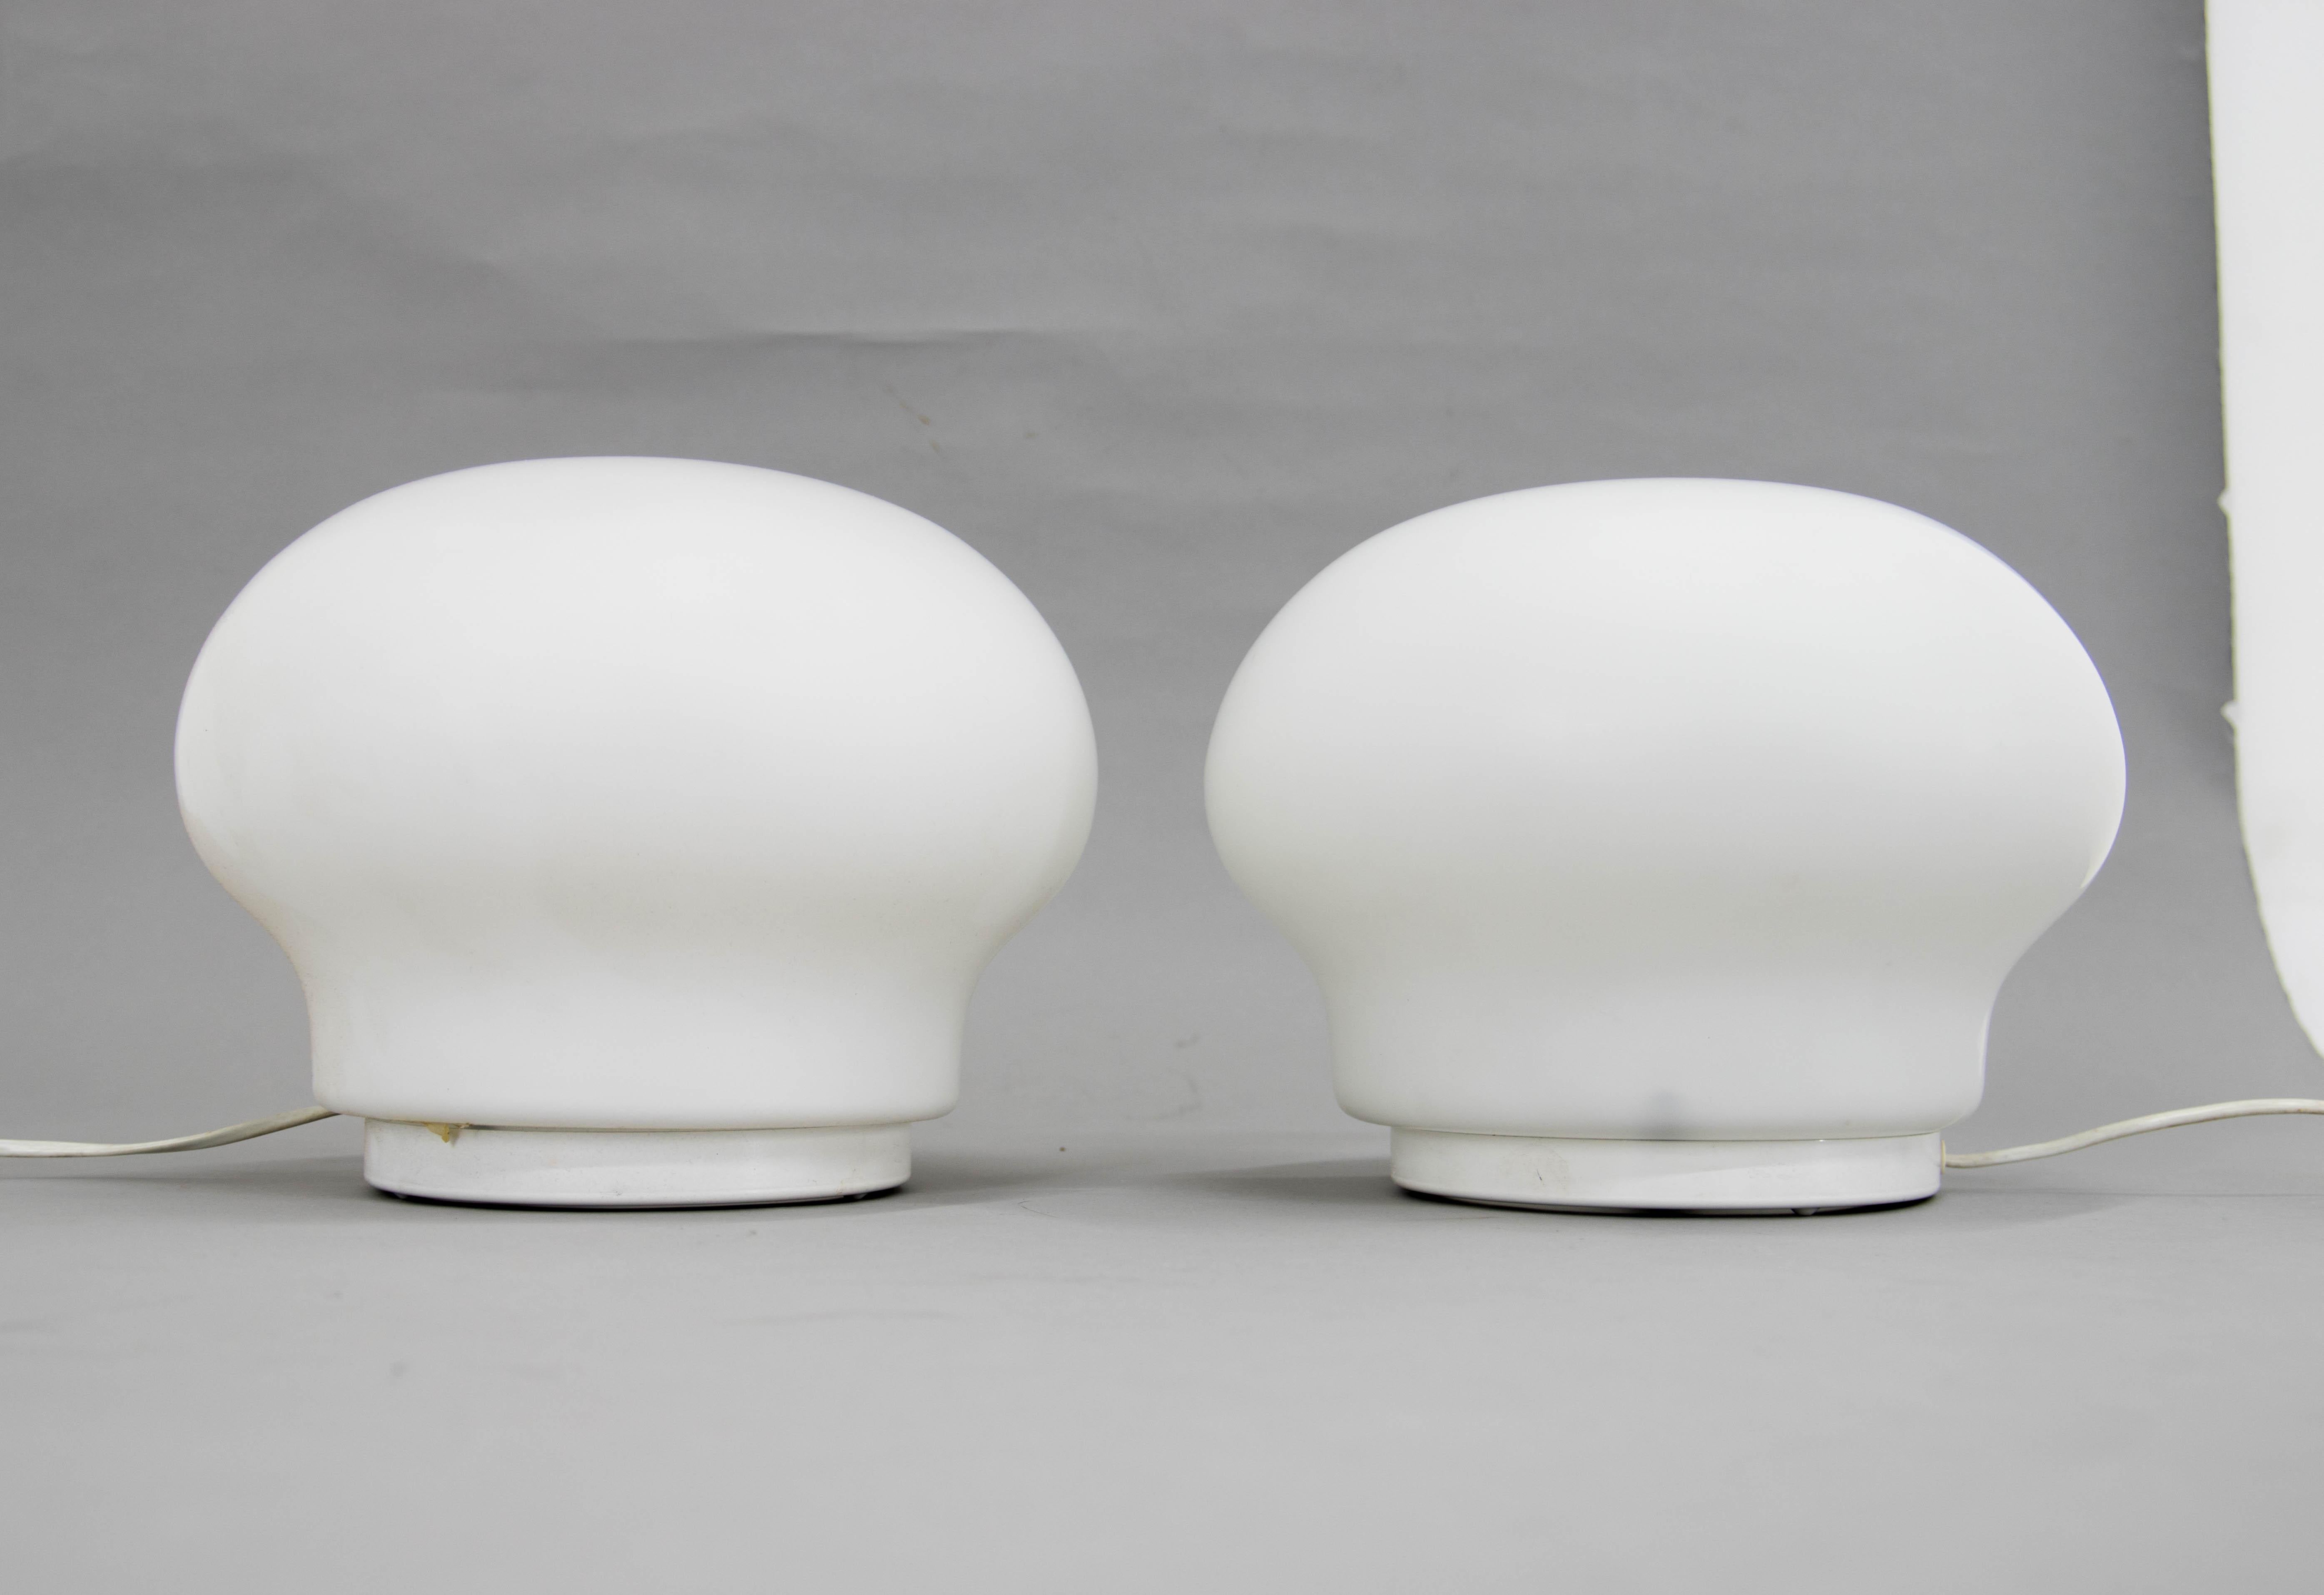 White metal base.
Blown glass shade.
Original perfect condition.
1x75W, E25-E27 bulbs
US plug adapter included.